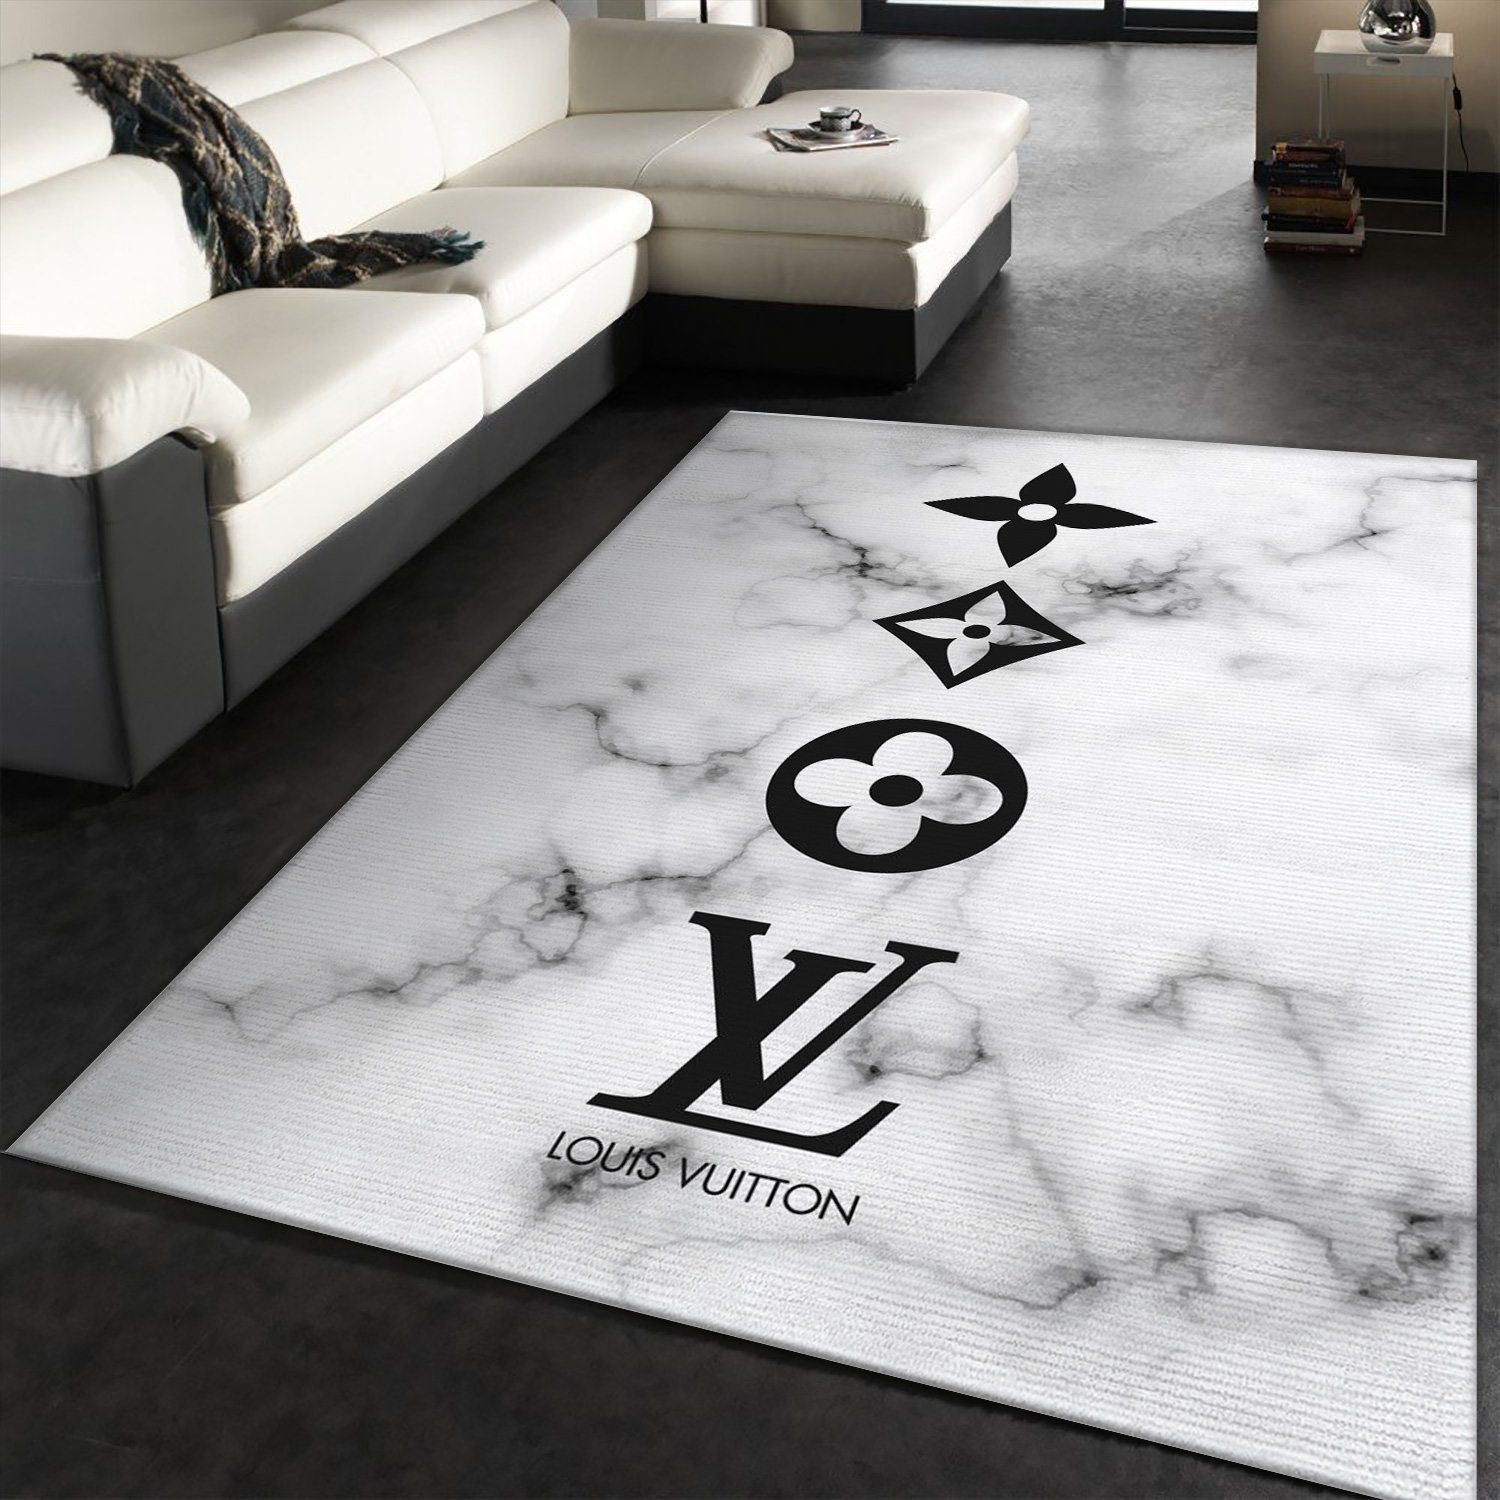 Louis Vuitton Area Christmas Luxury Fashion Brand Rug Door Mat Home Decor Area Carpet